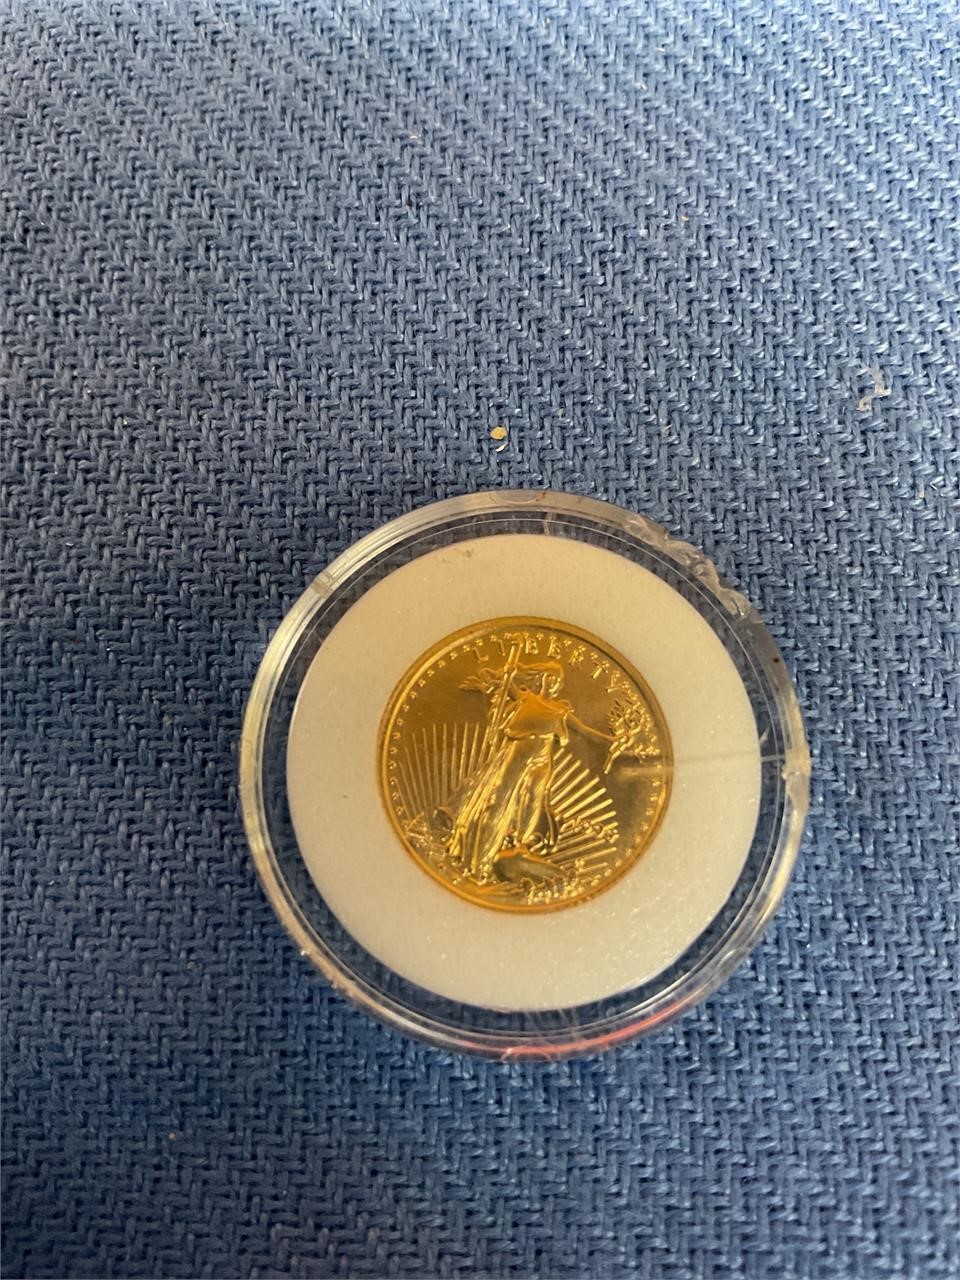 1/10 oz fine gold coin